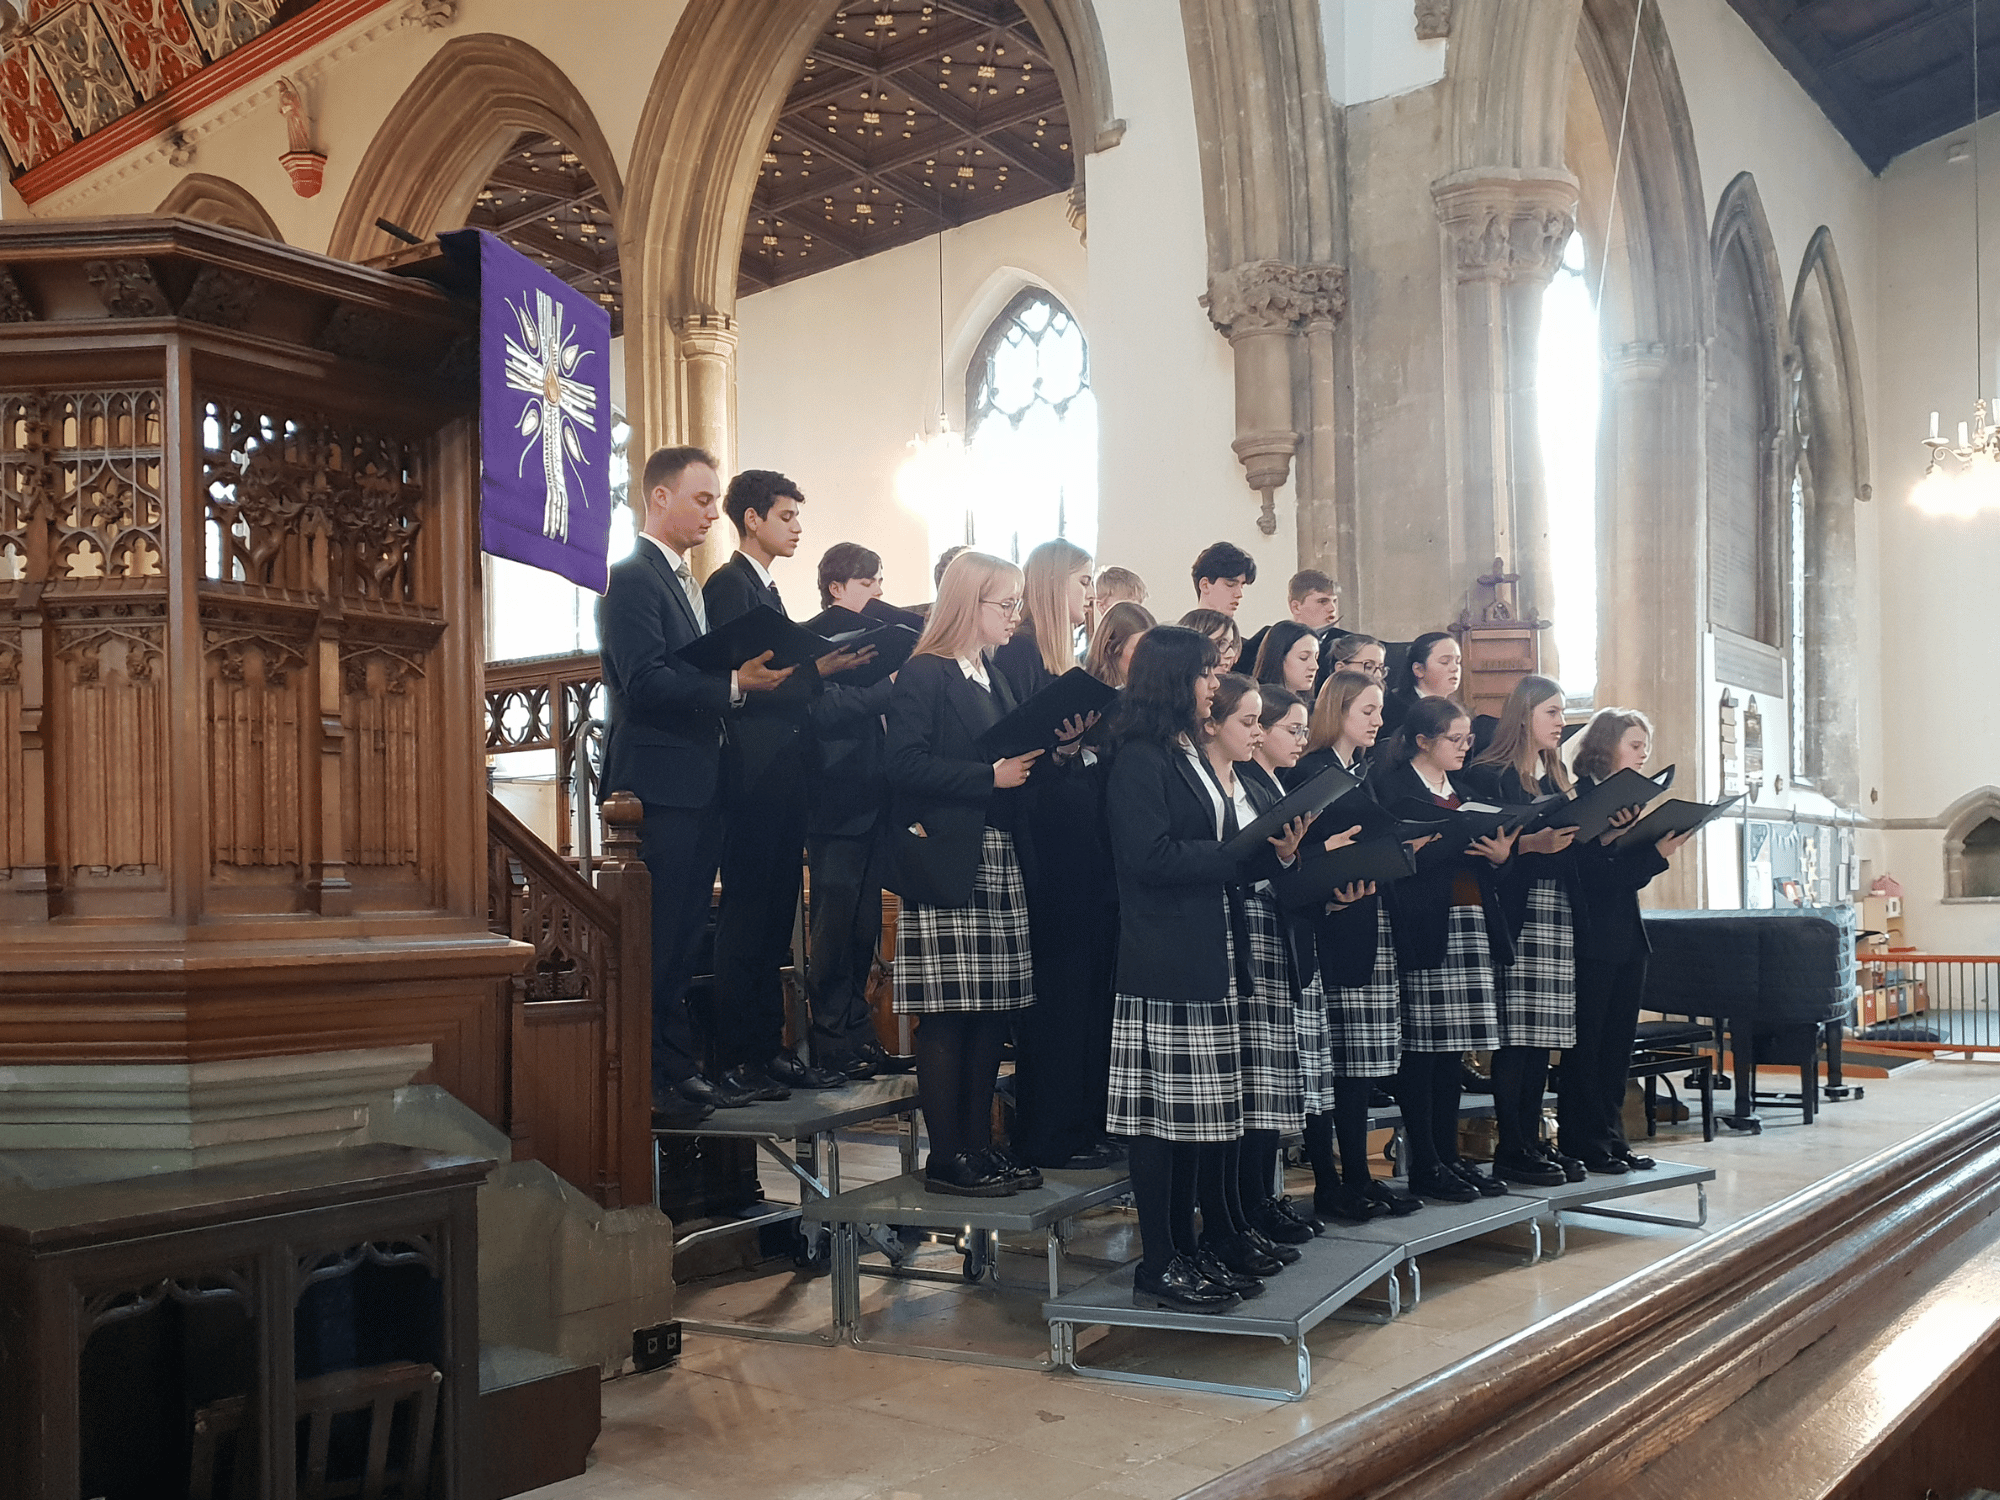 School choir sing in church in a concert